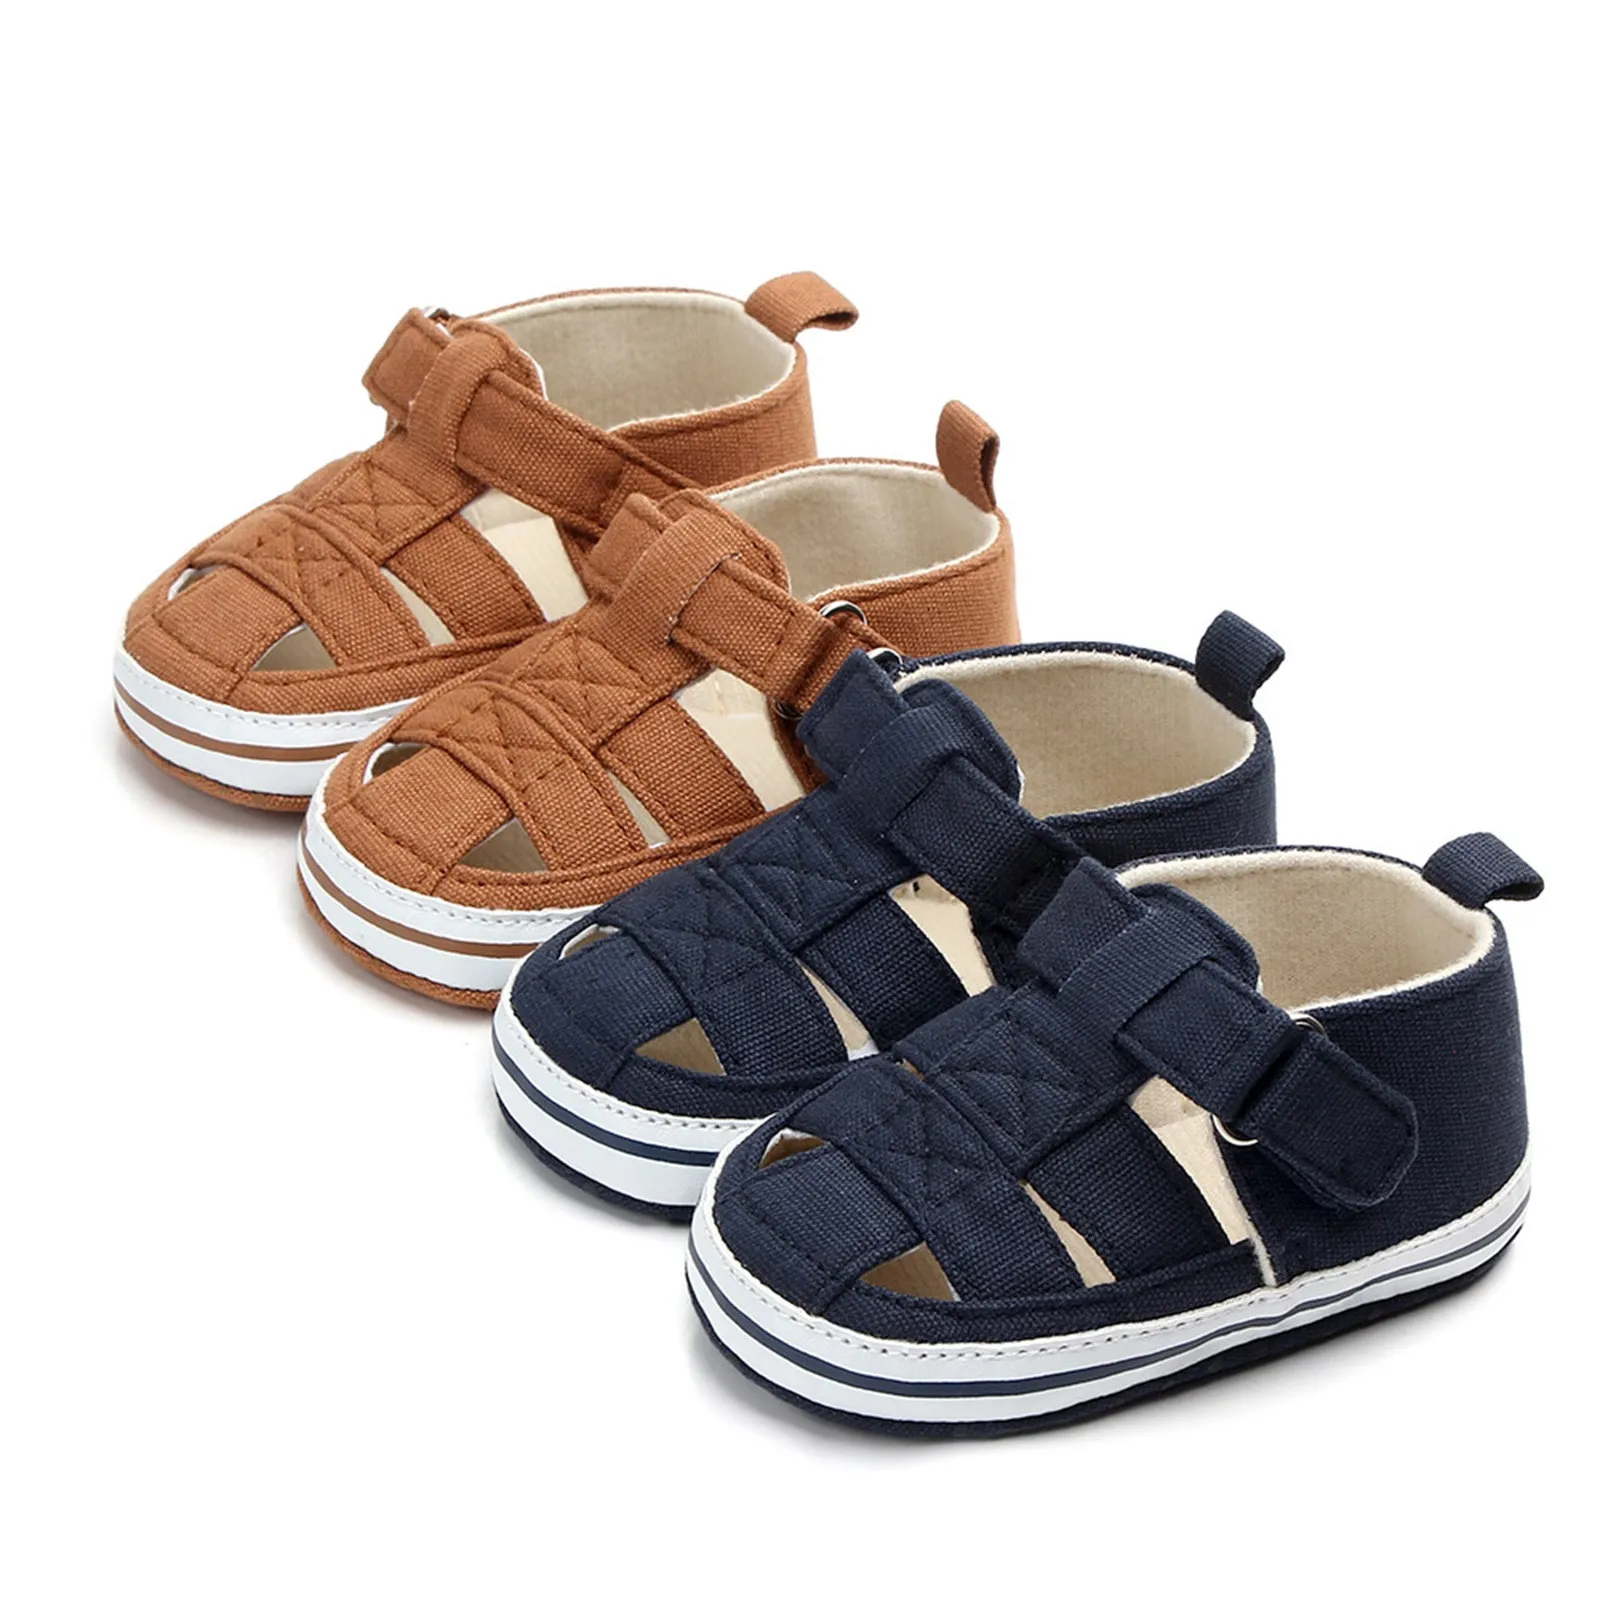 Kenthy Infant Baby Boys Girls Sandals Athletic Anti-slip Soft Sole Newborn Summer Beach Slippers First Walker Crib Shoes 